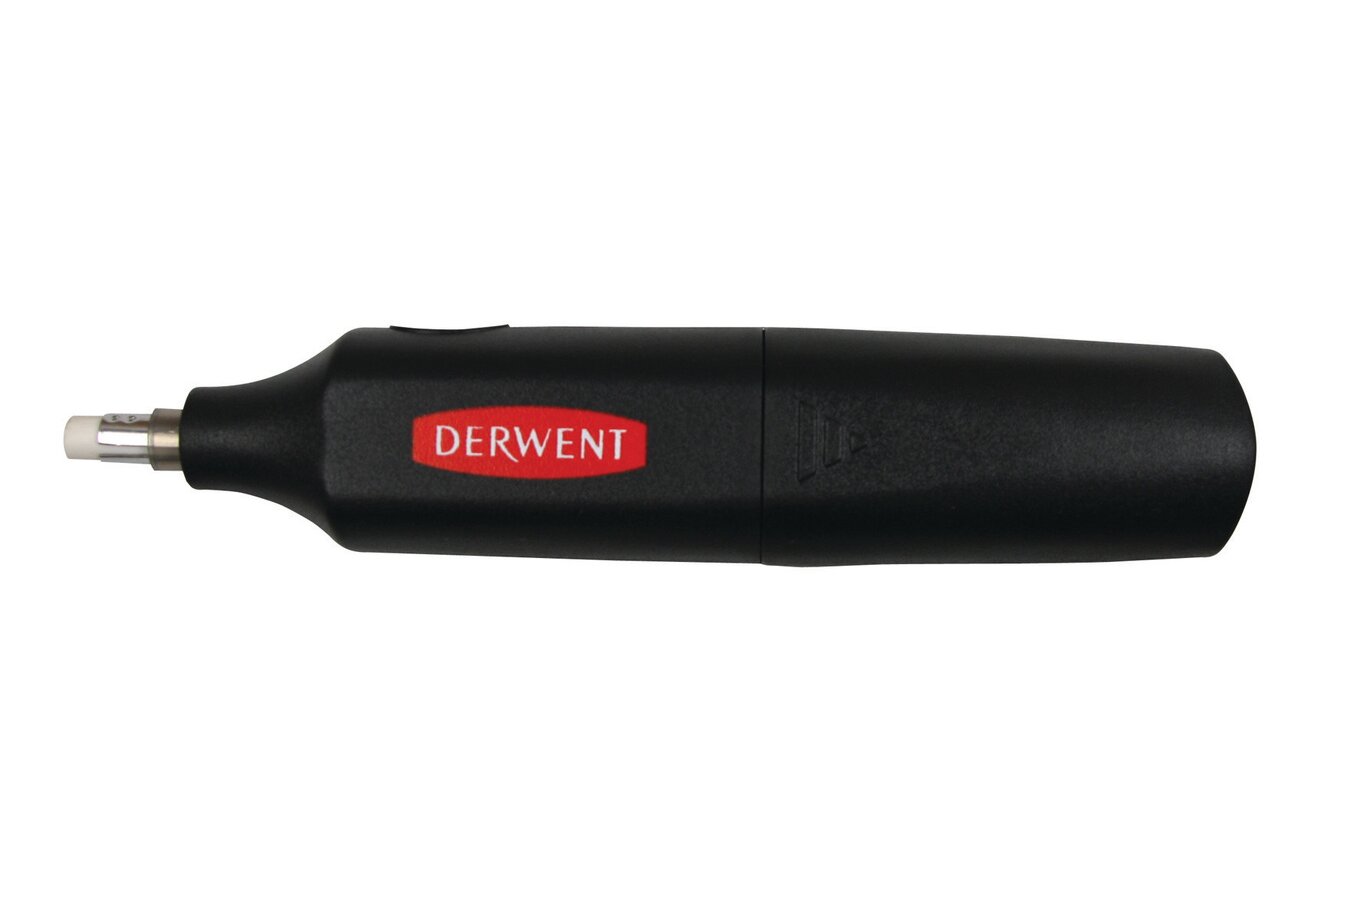 Derwent USB Rechargeable Eraser Features & Benefits (30 sec) 